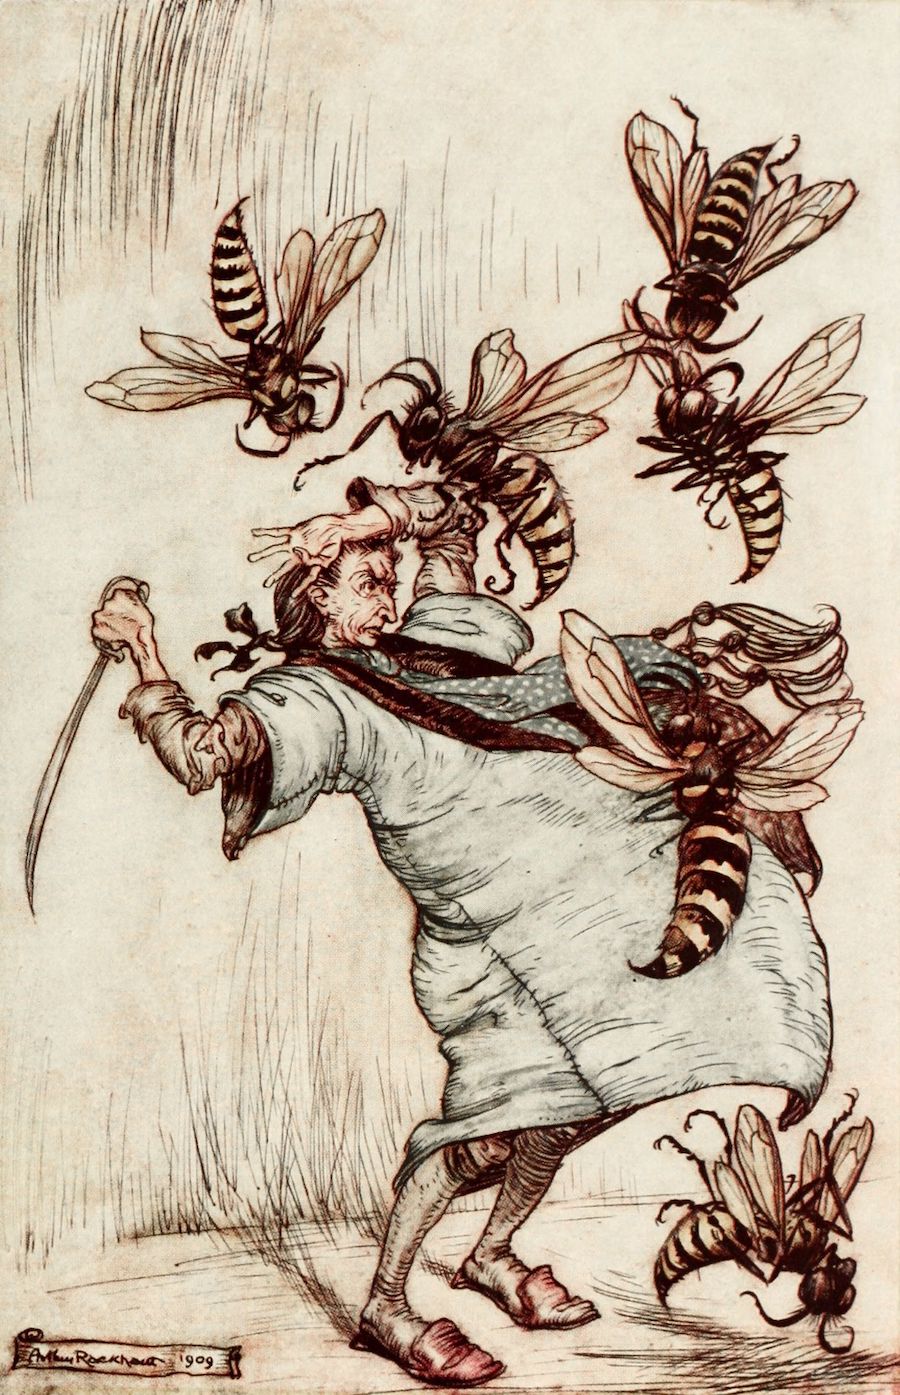 Gulliver swings his sword at giant hornets